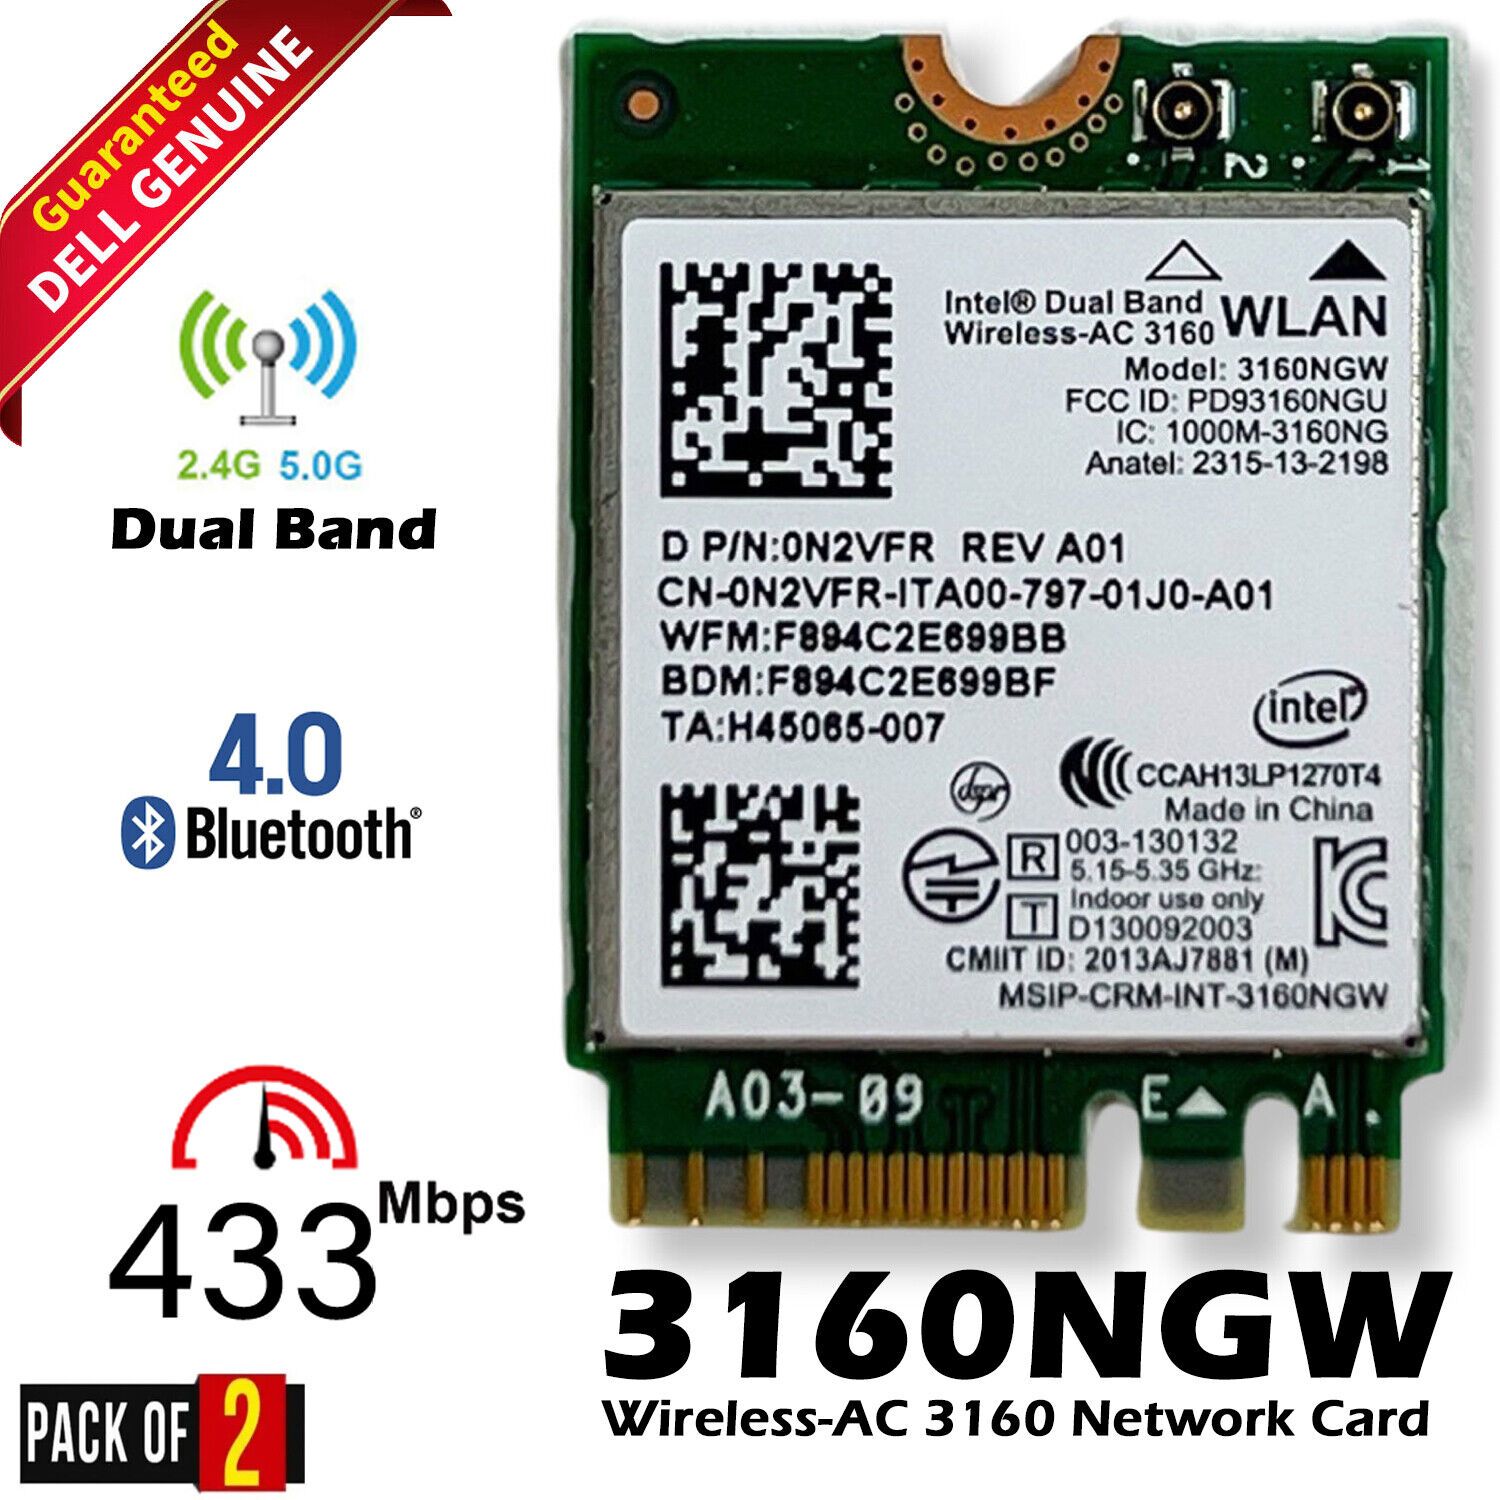 Lot X 2 Dell Inspiron 15 5547 7548 5558 3160NGW Dual Band WLAN WiFi Card N2VFR